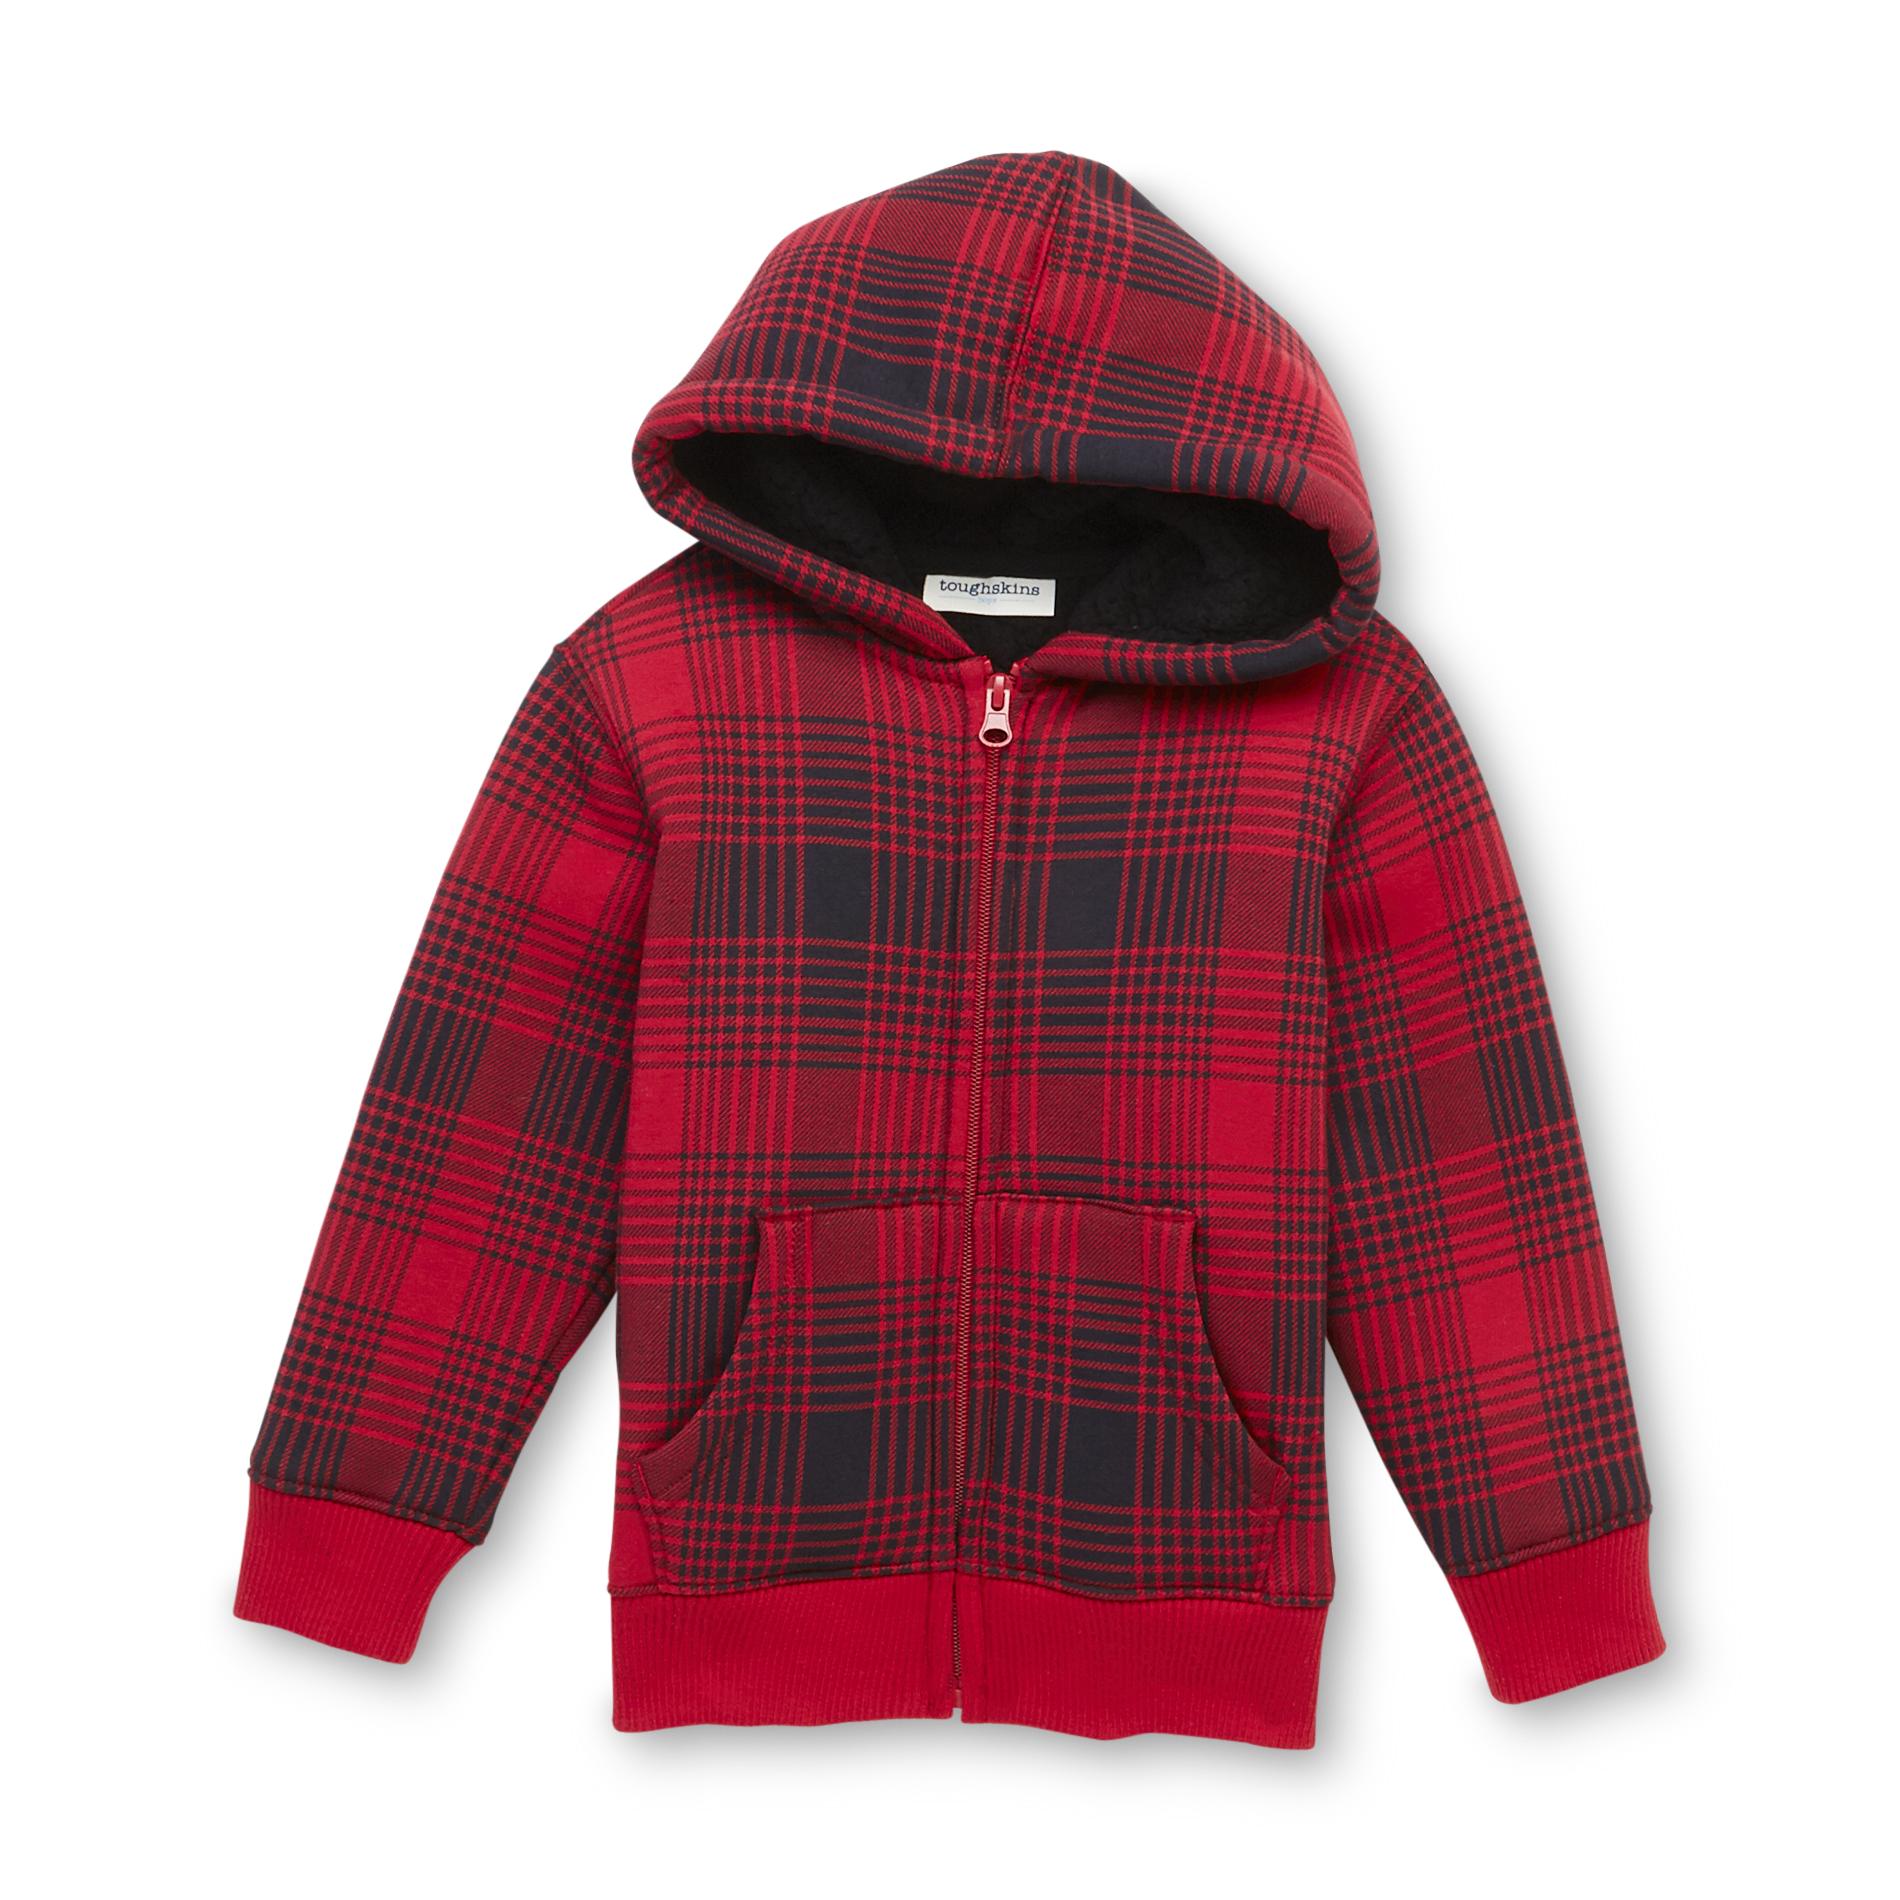 Toughskins Infant & Toddler Boy's Fleece Hoodie Jacket - Plaid